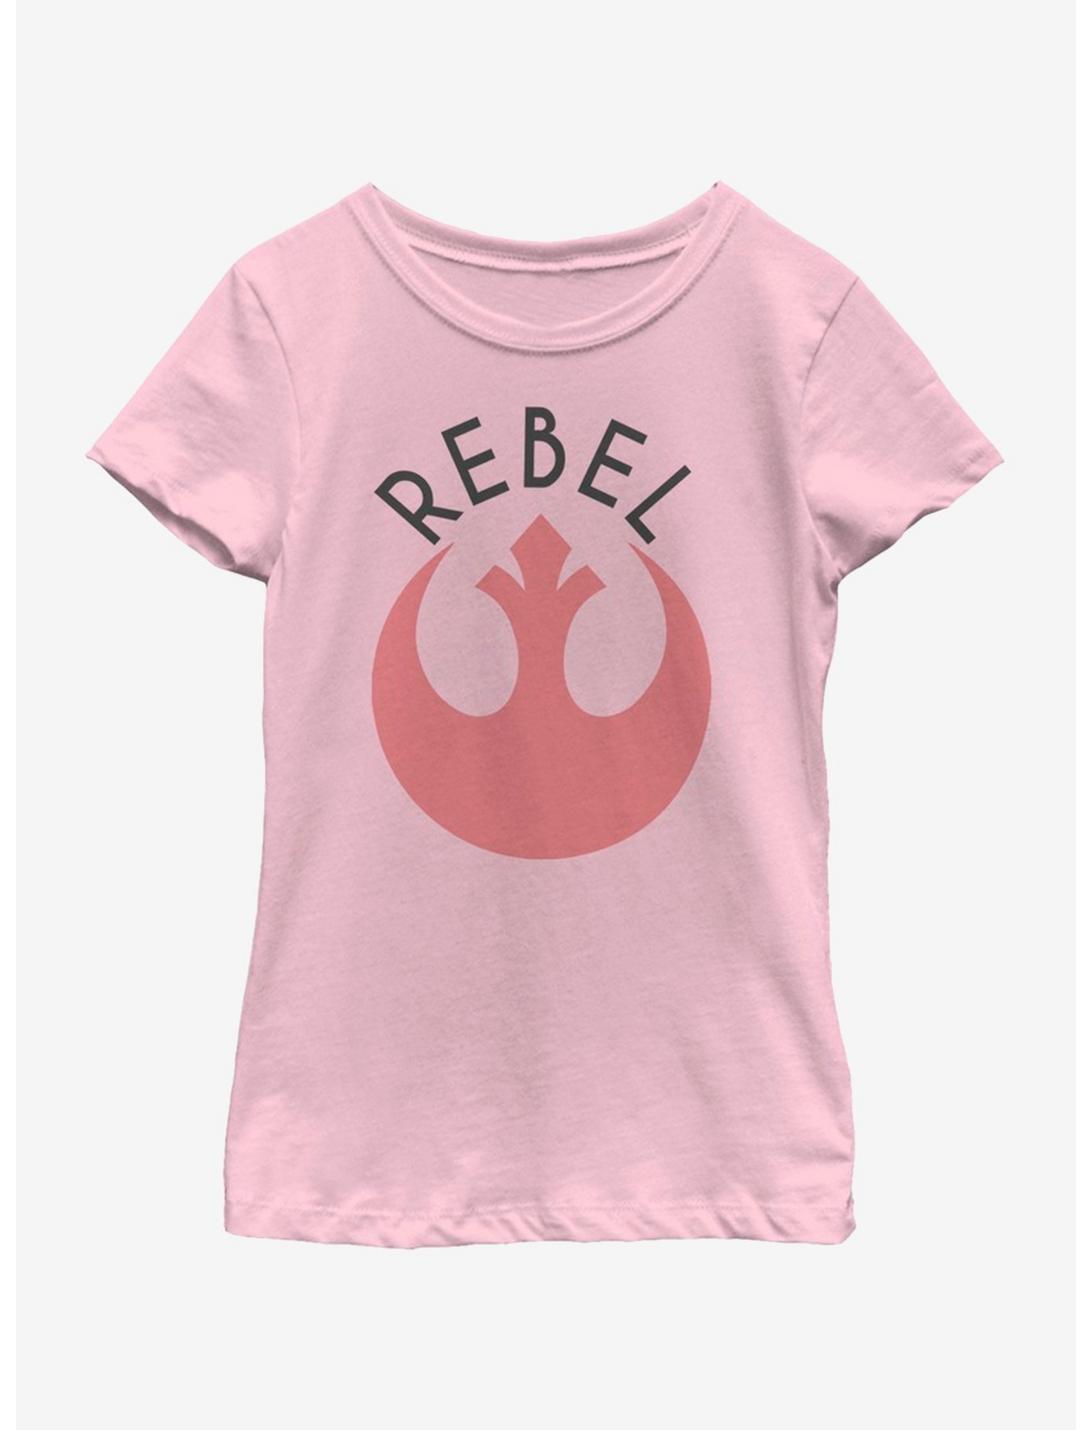 Star Wars Episode VII The Force Awakens Rebel Youth Girls T-Shirt, PINK, hi-res